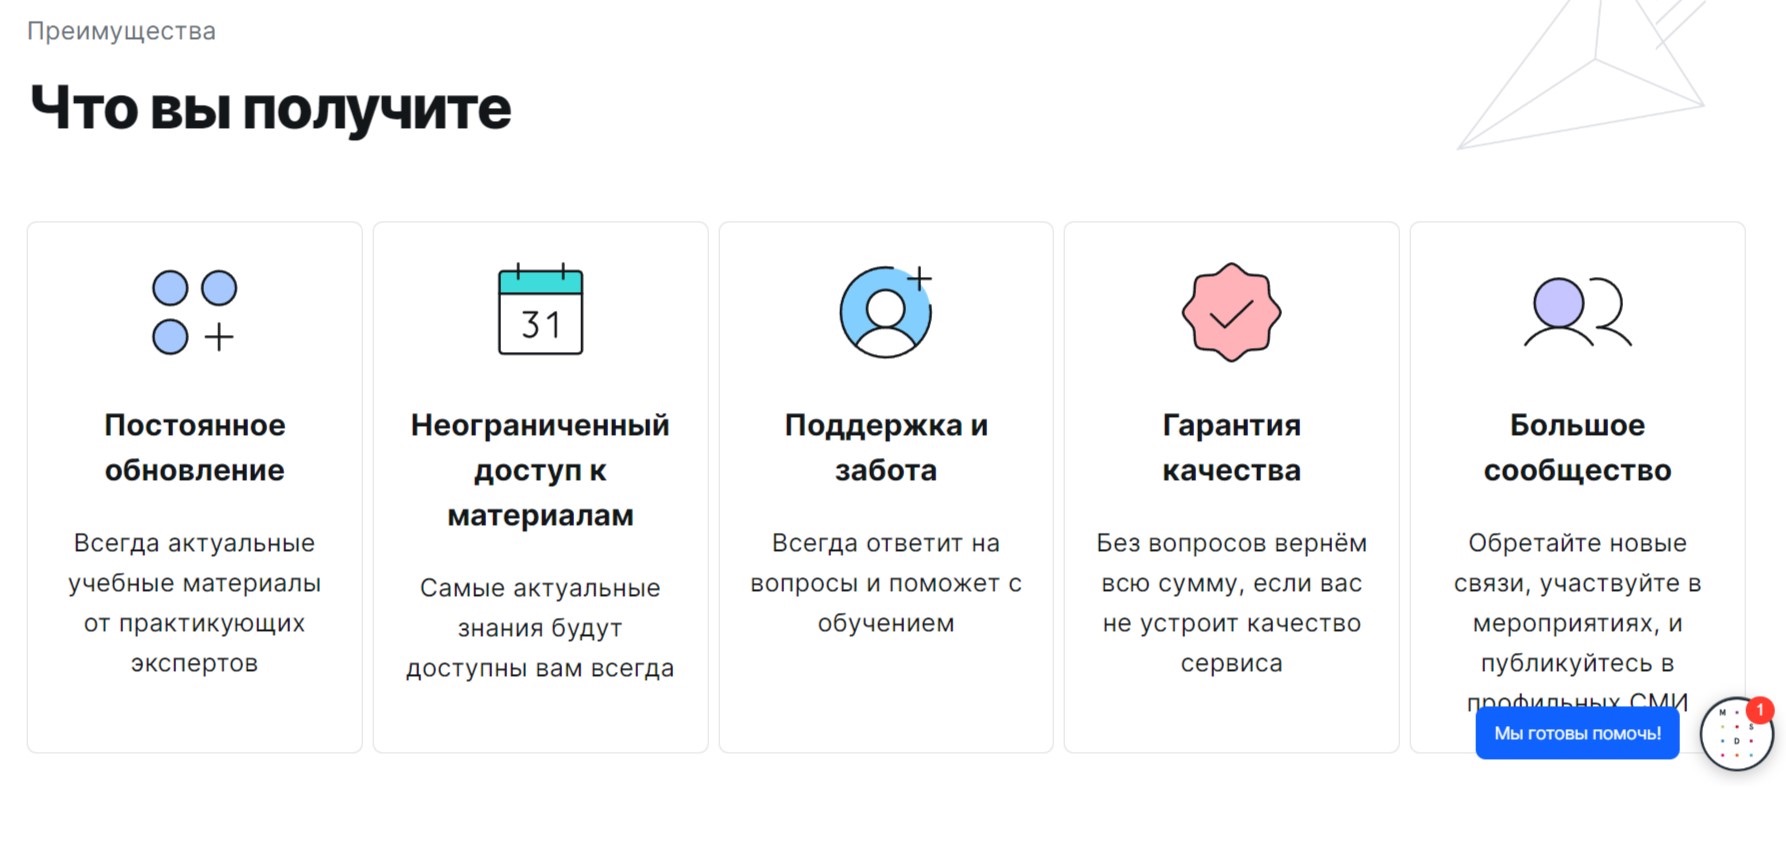 Особенности курсов Moscow digital school